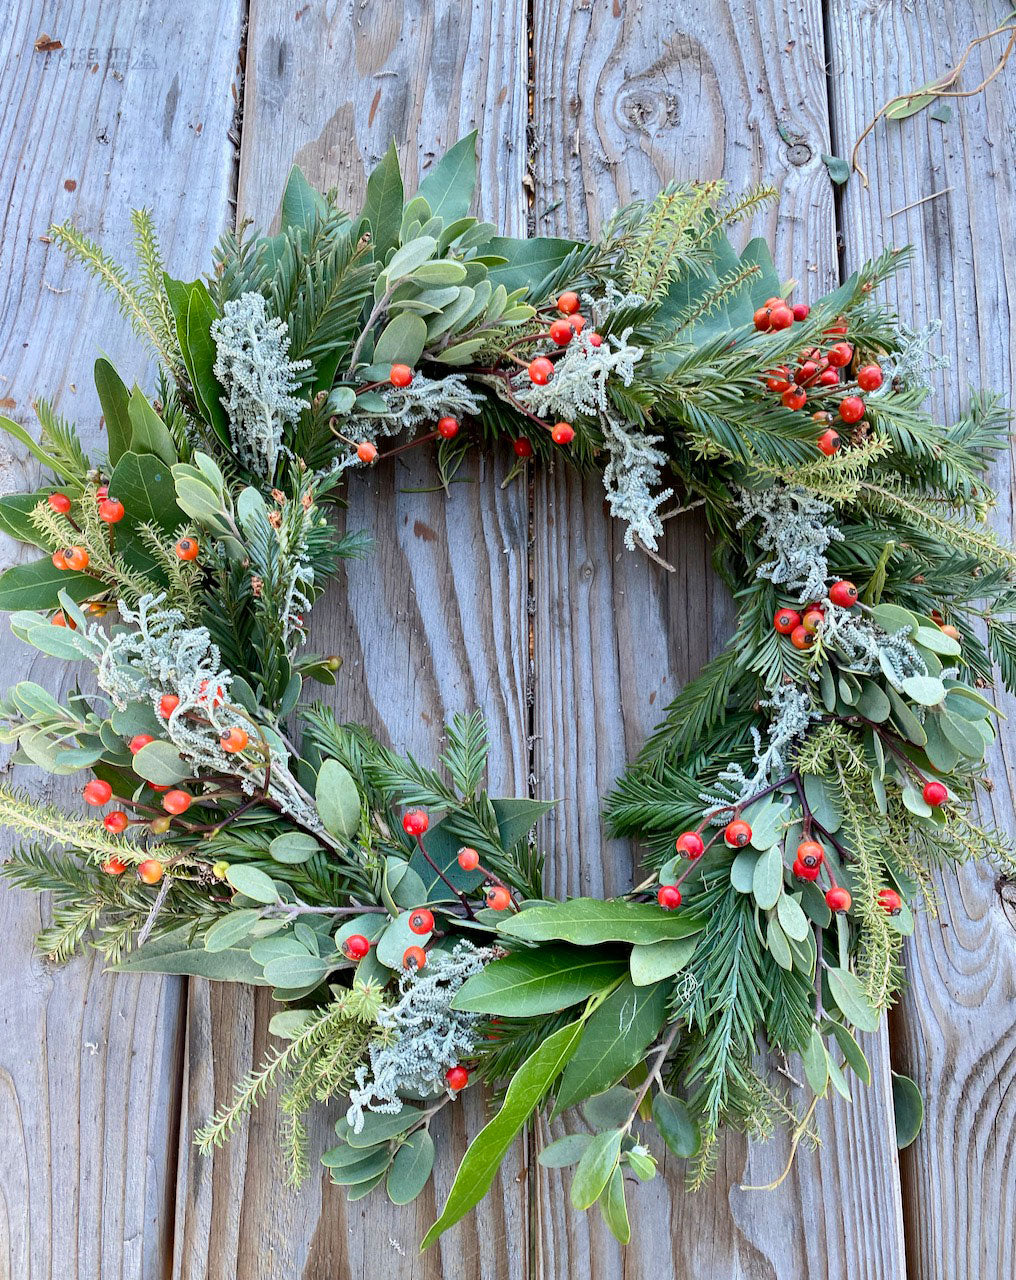 Holiday Wreath Making Workshop - December 2nd